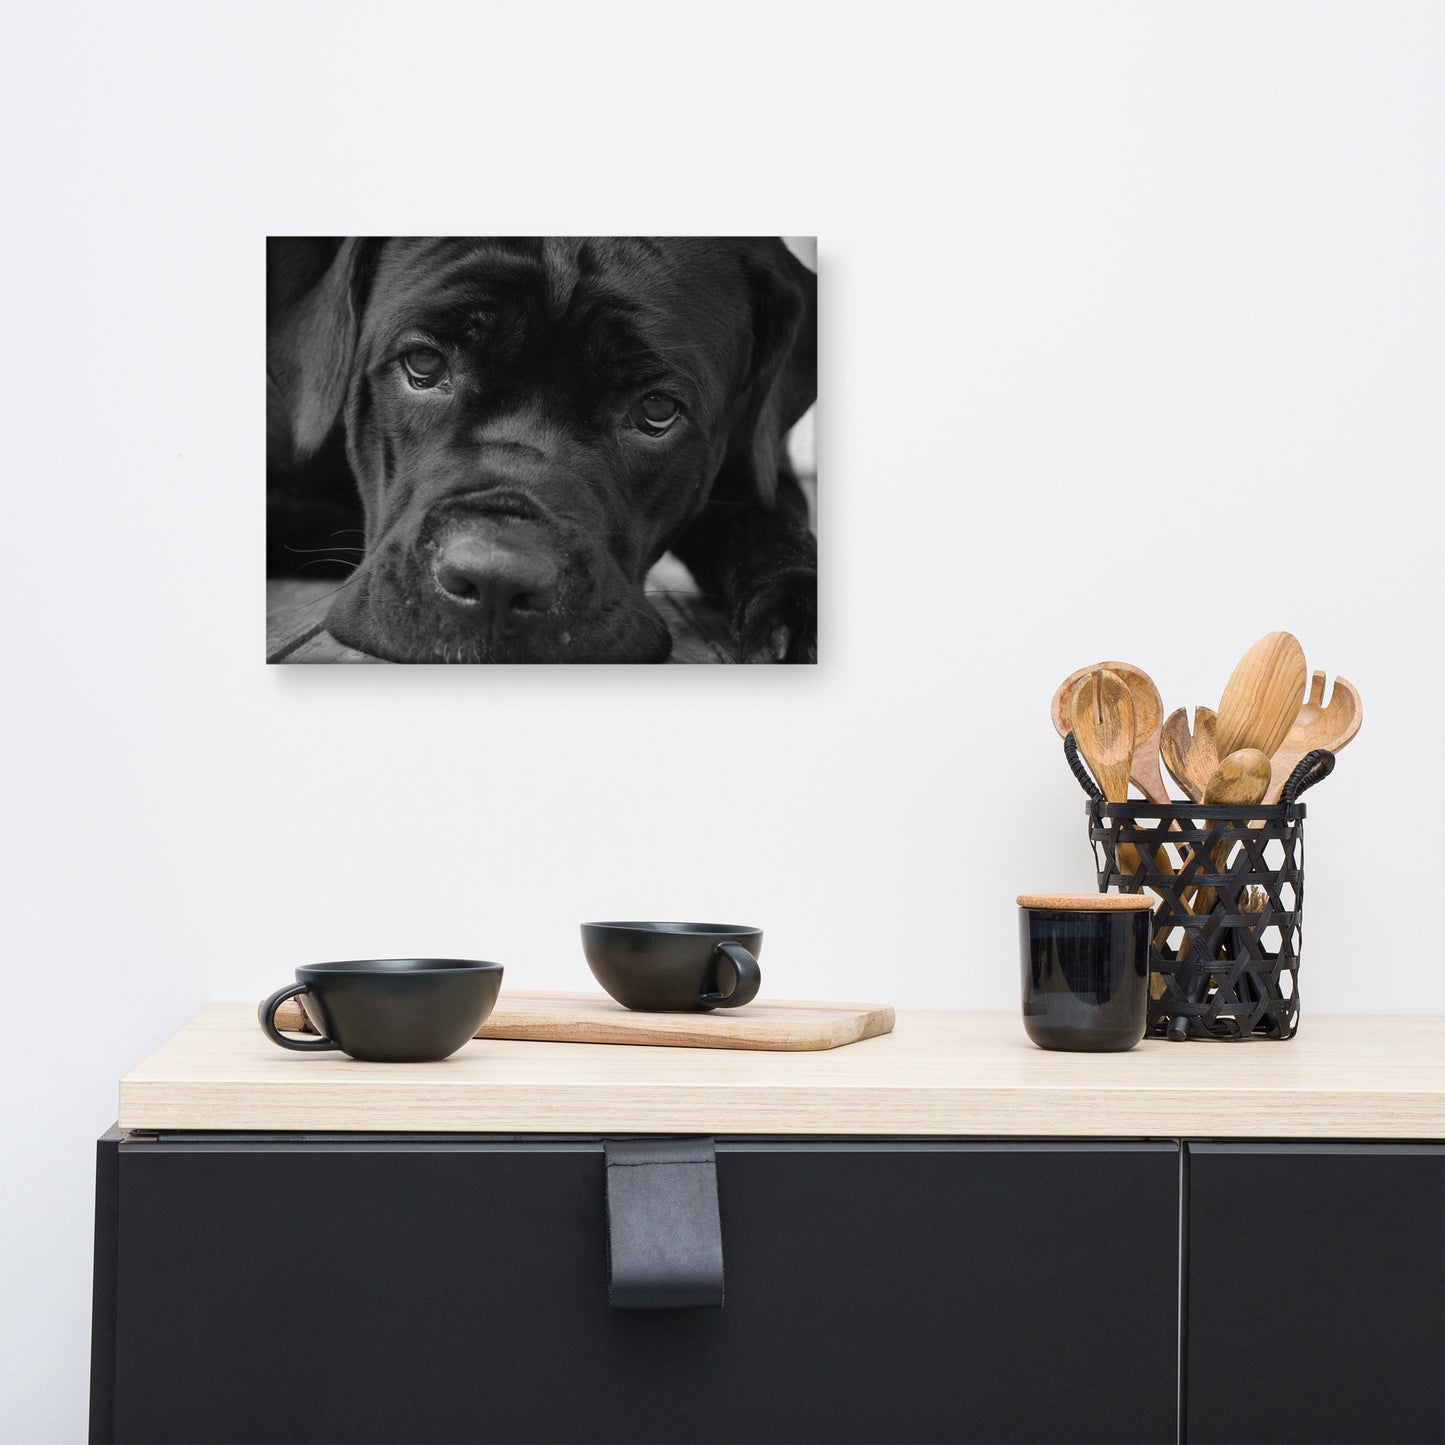 Cane Corso on Porch Animal / Dog Black & White Canvas Wall Art Prints